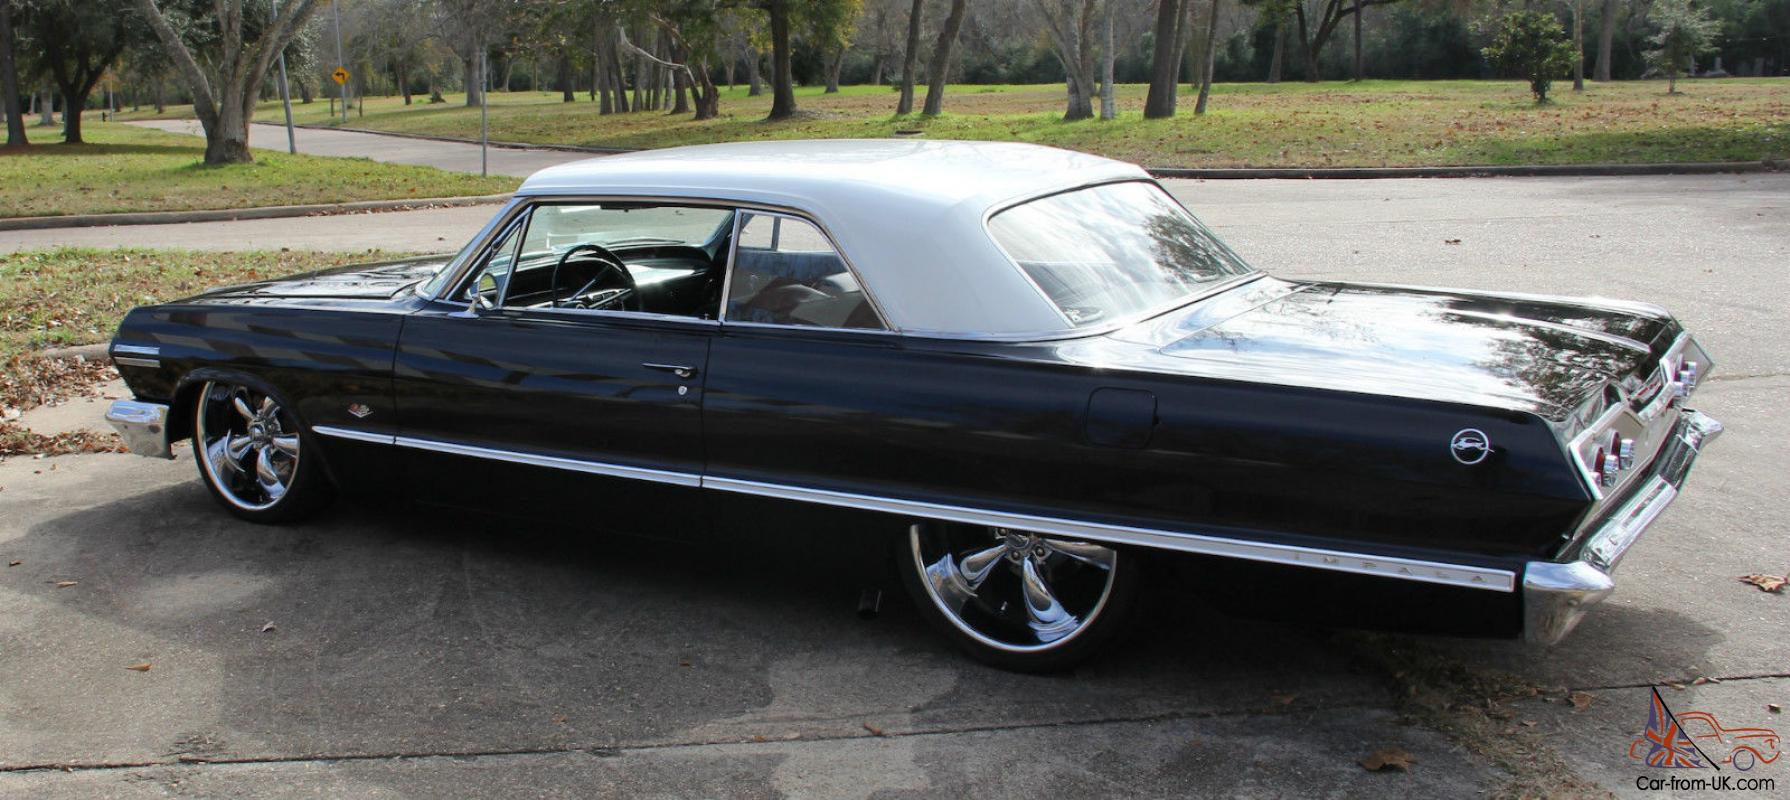 1963 Chevrolet Impala 2 Door Hardtop Black Paint Black Interior Air Ride